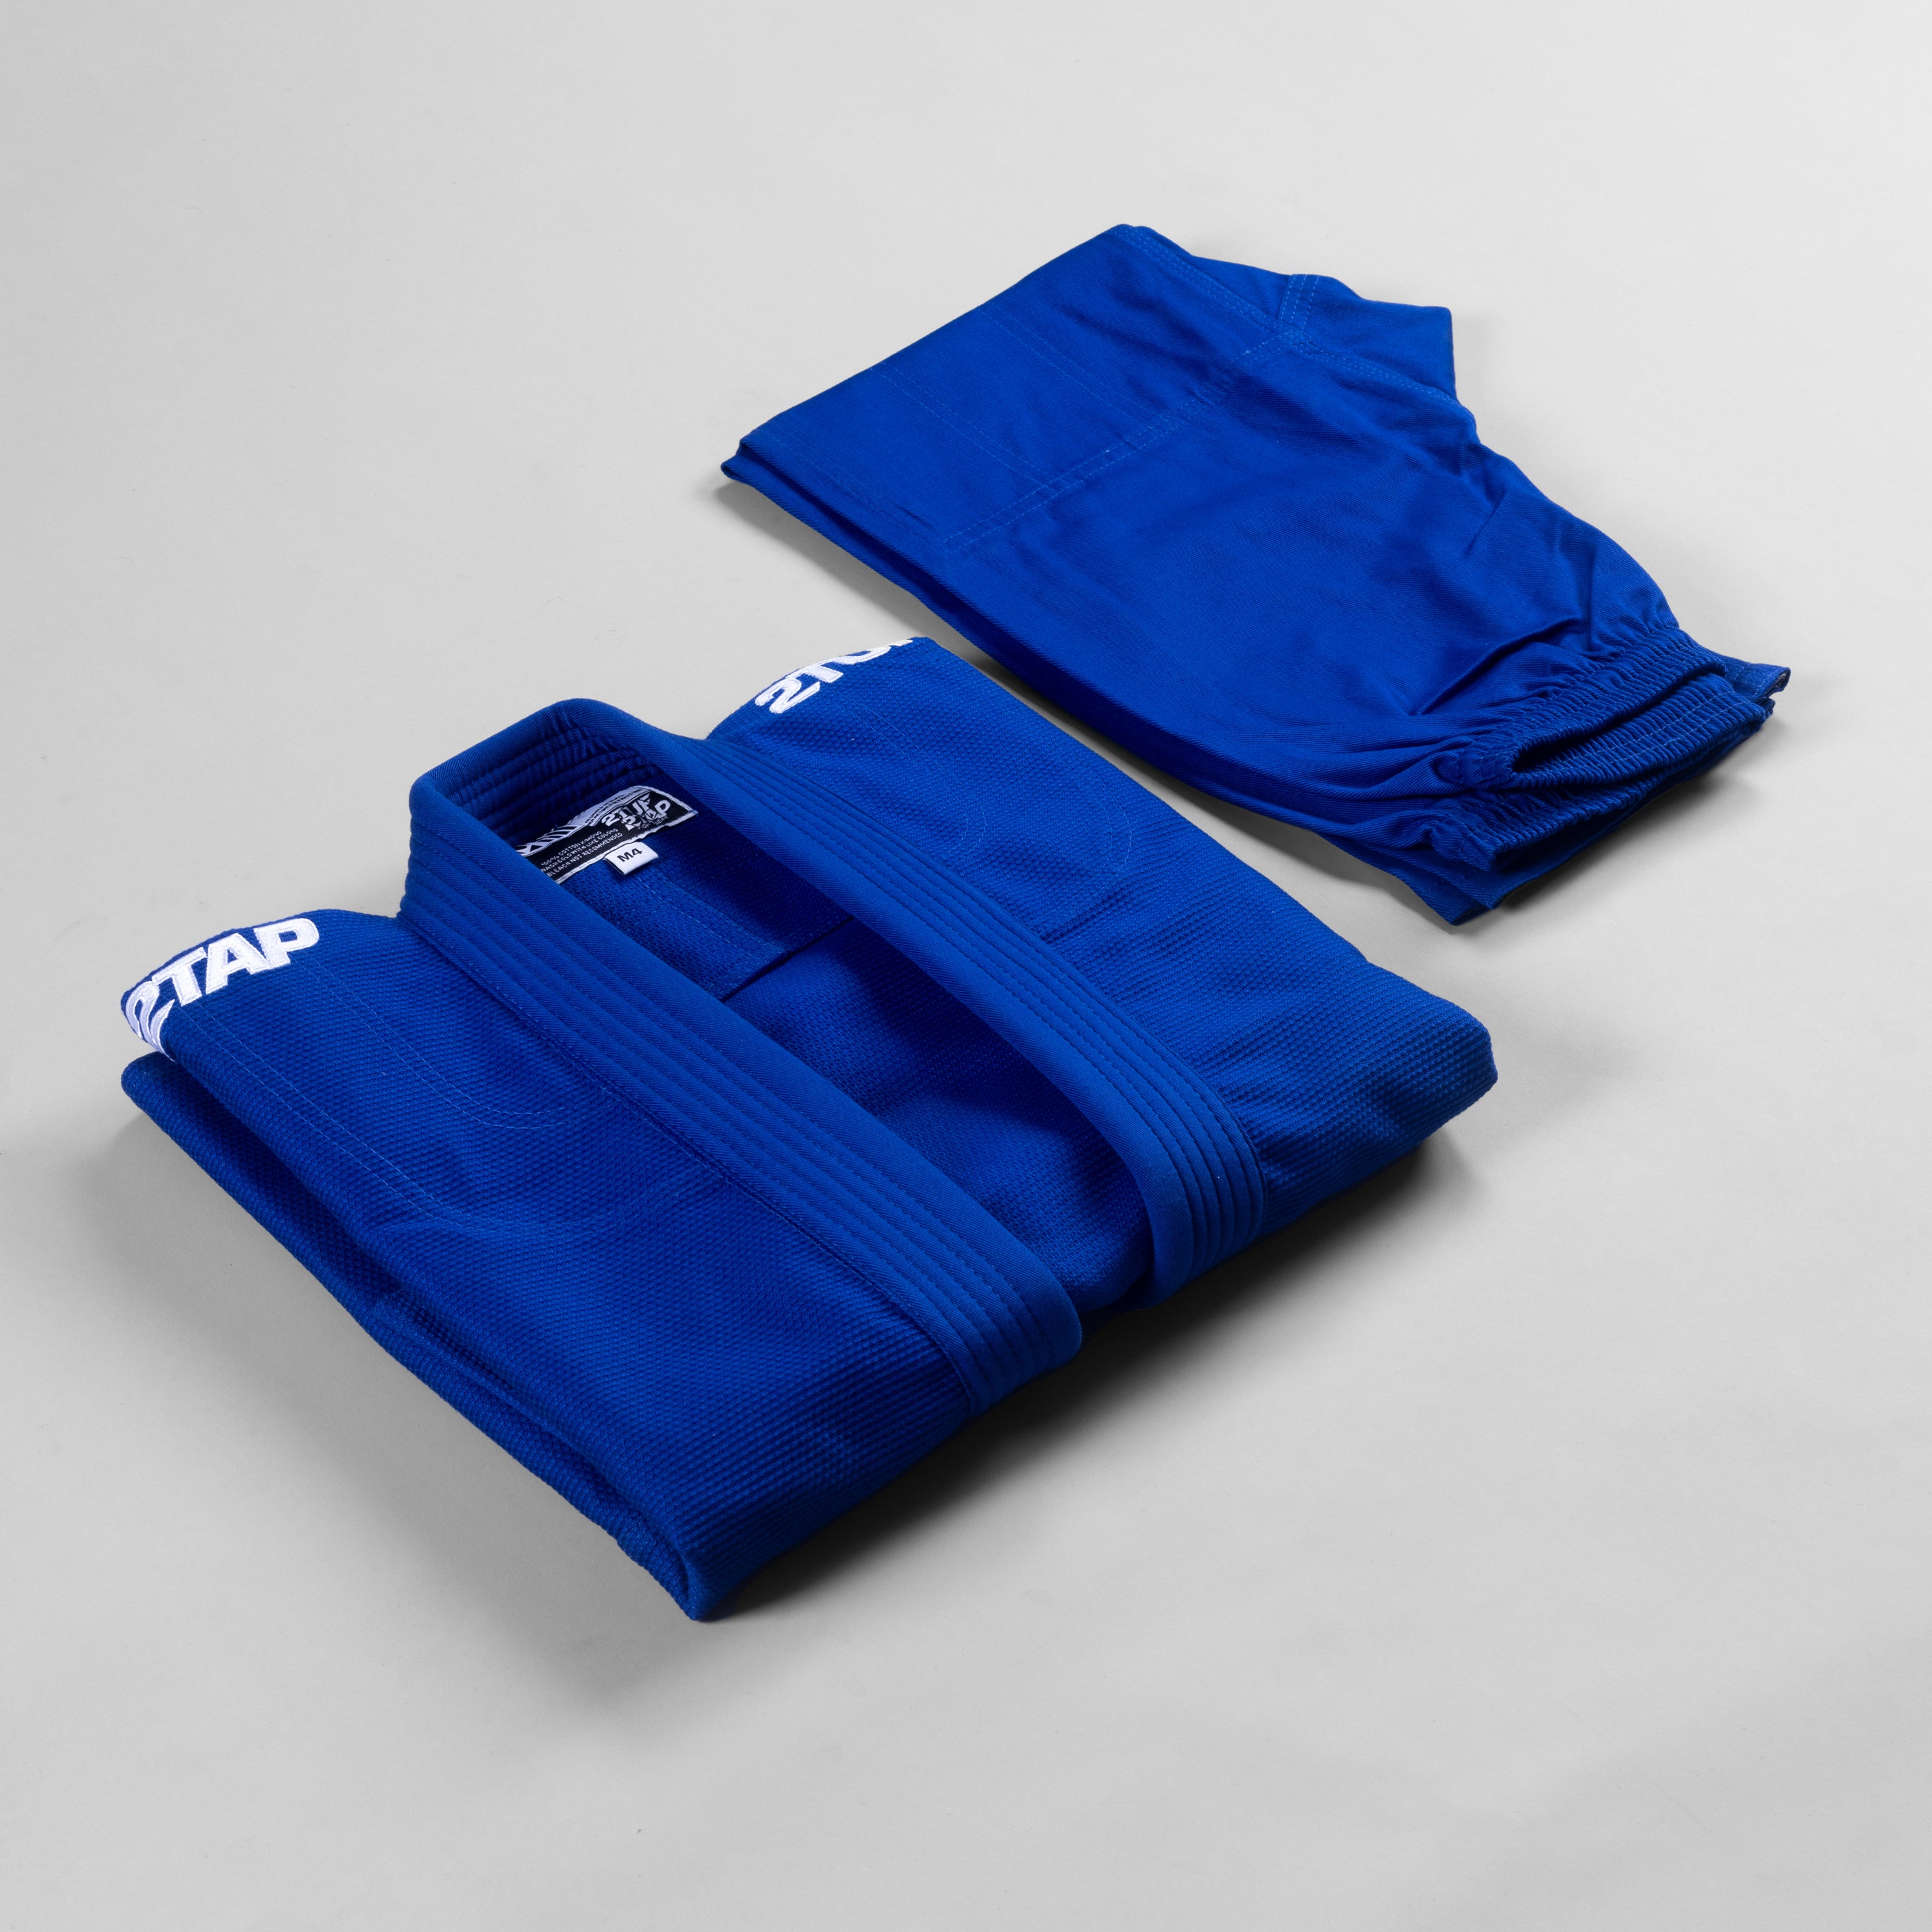 'Sweep' Jiu-Jitsu Gi Uniform - Blue/White 2TUF2TAP